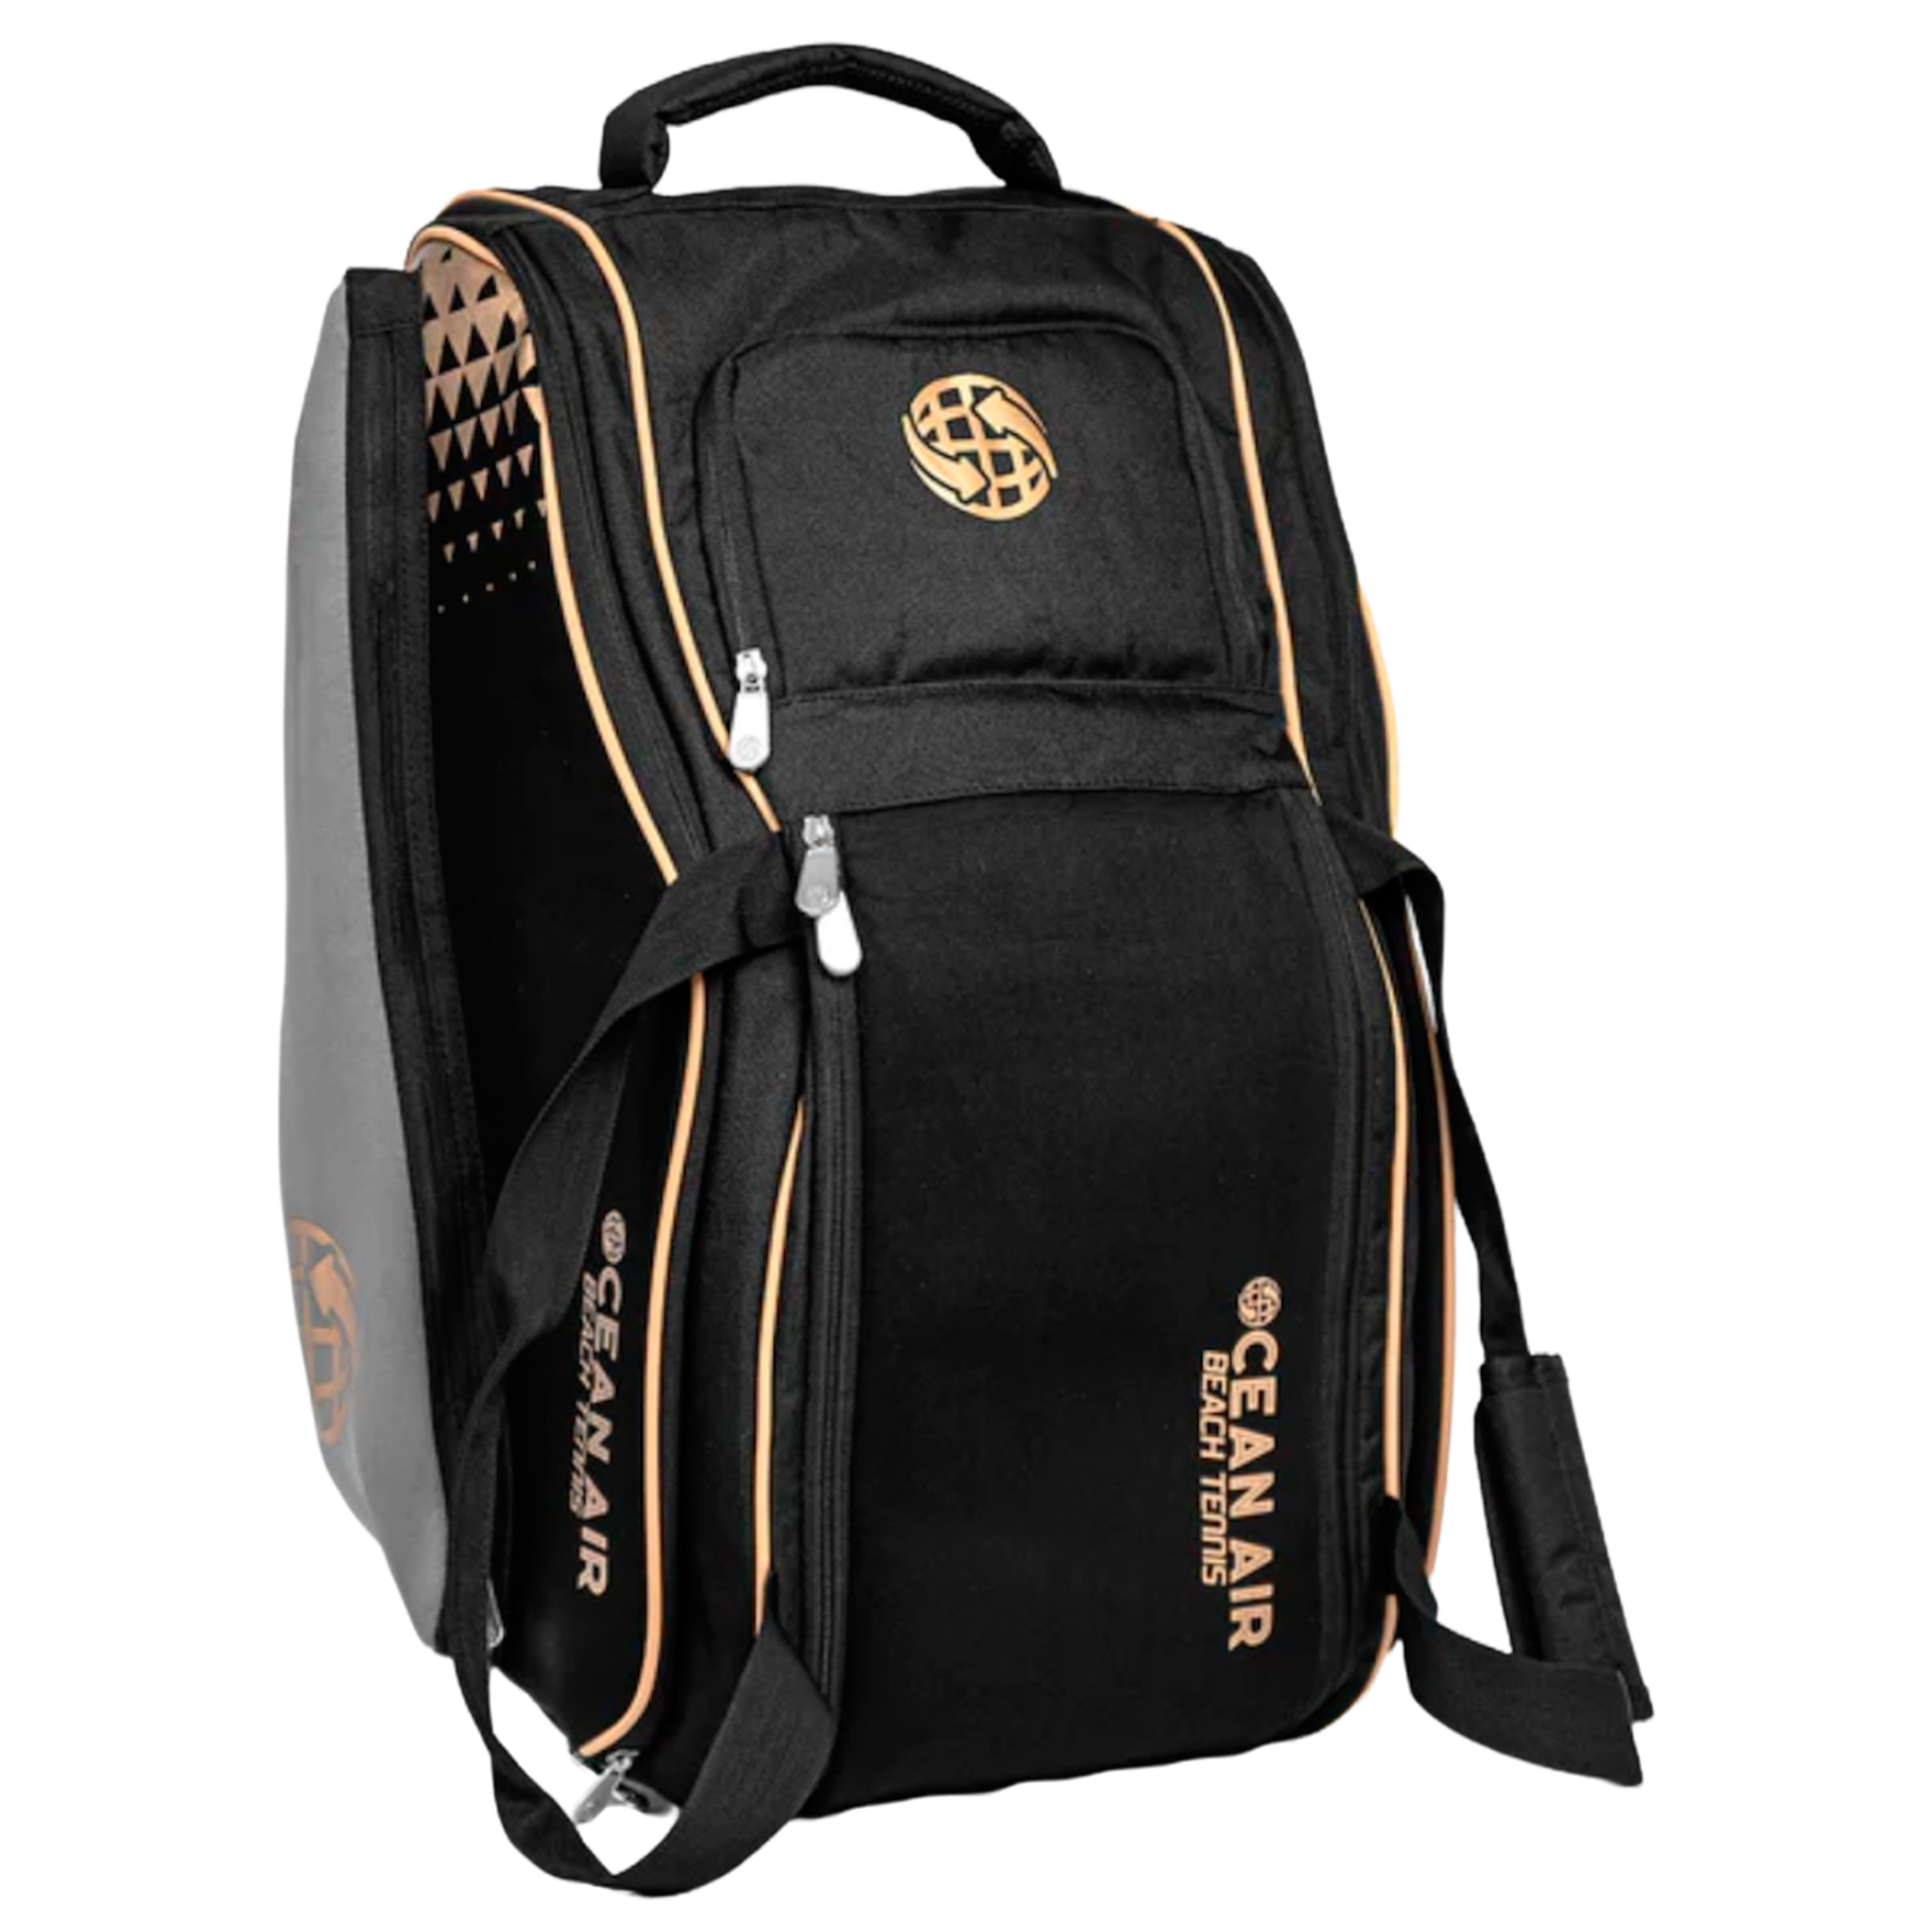 Ocean Air Pro BT Black Compact Bag